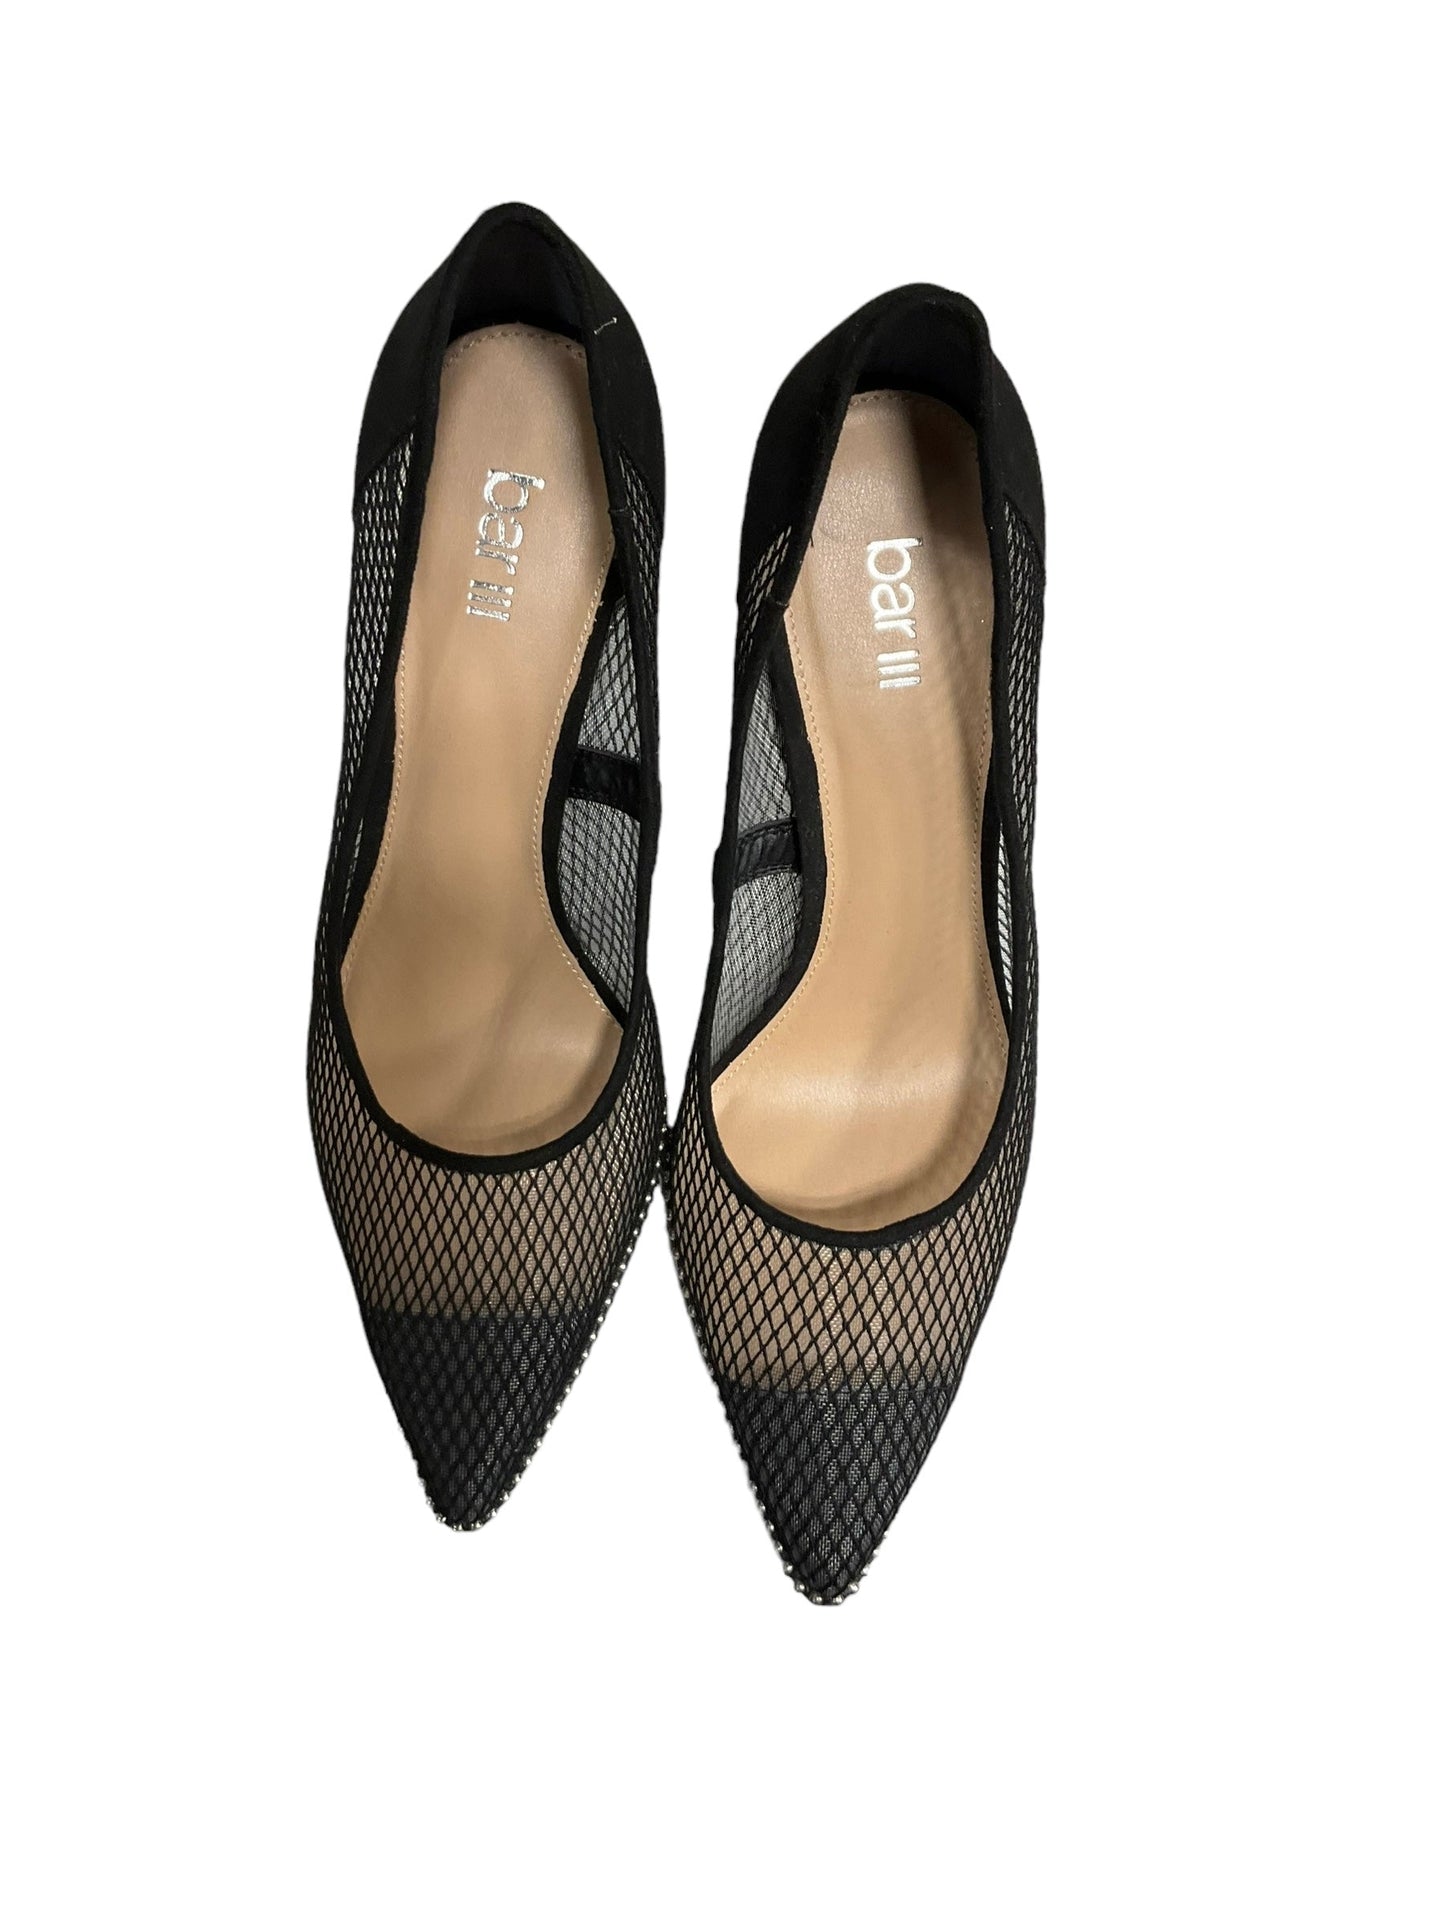 Black Shoes Heels Stiletto Bar Iii, Size 8.5